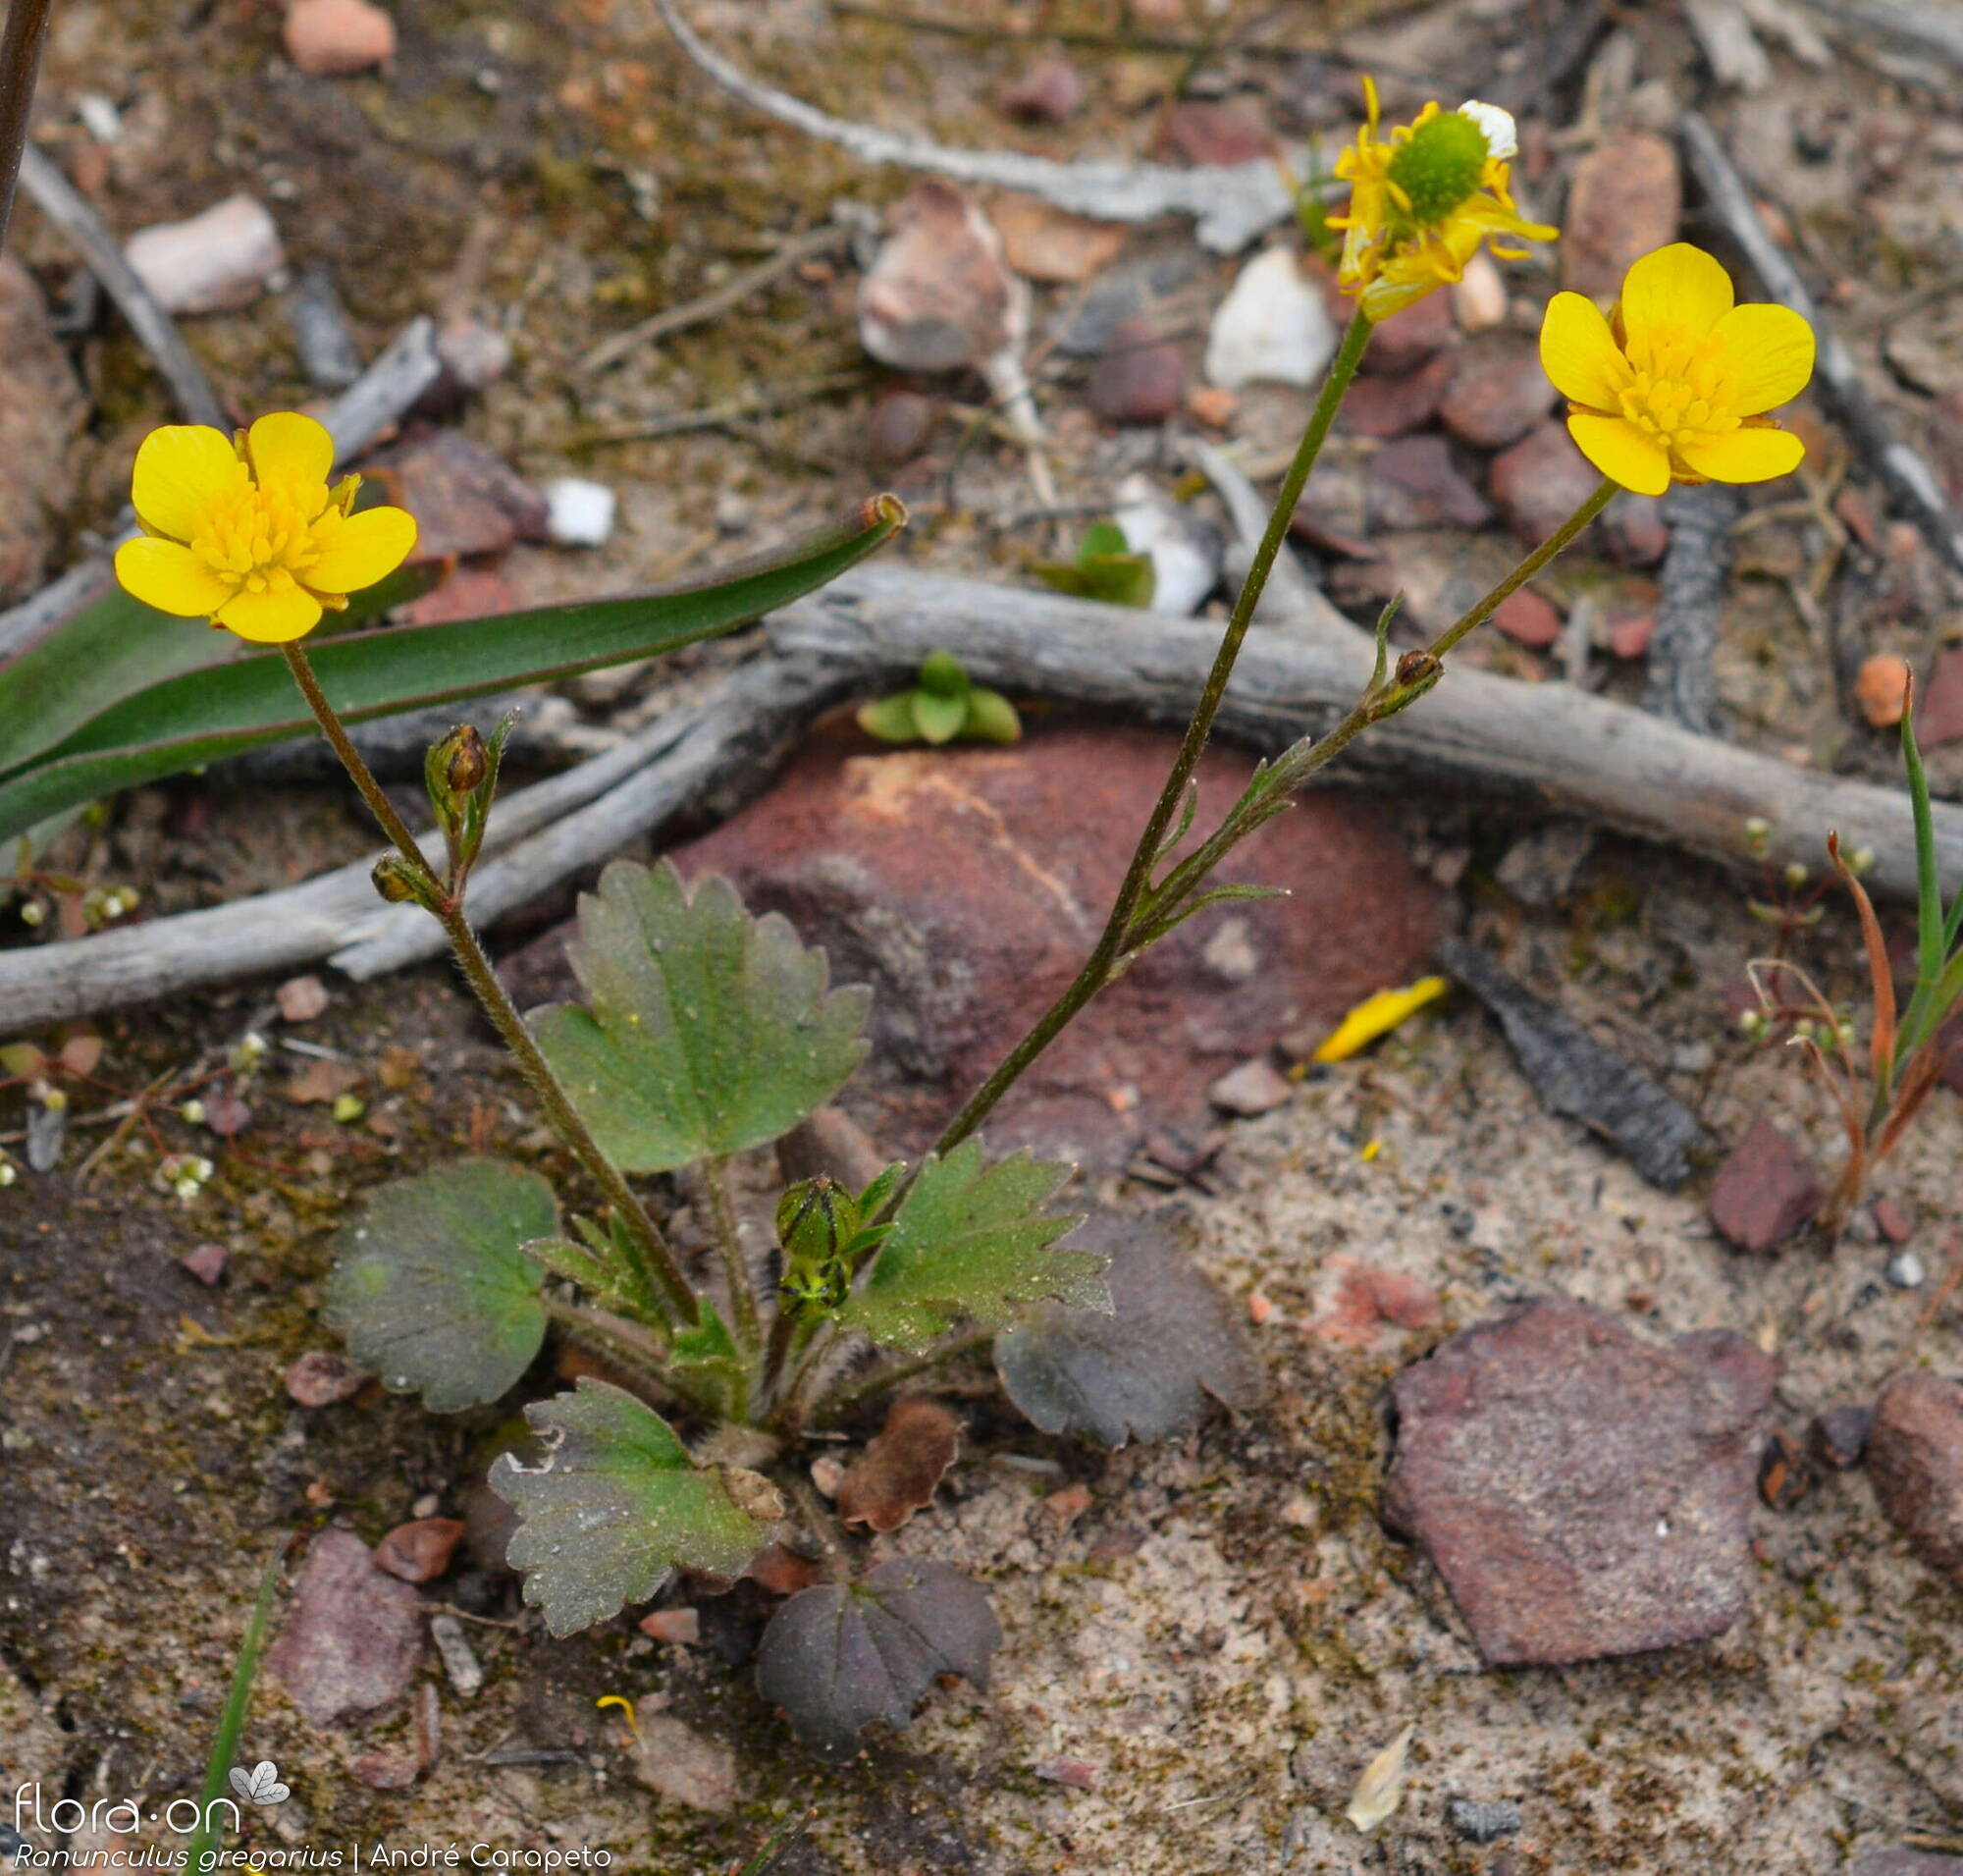 Ranunculus gregarius - Hábito | André Carapeto; CC BY-NC 4.0